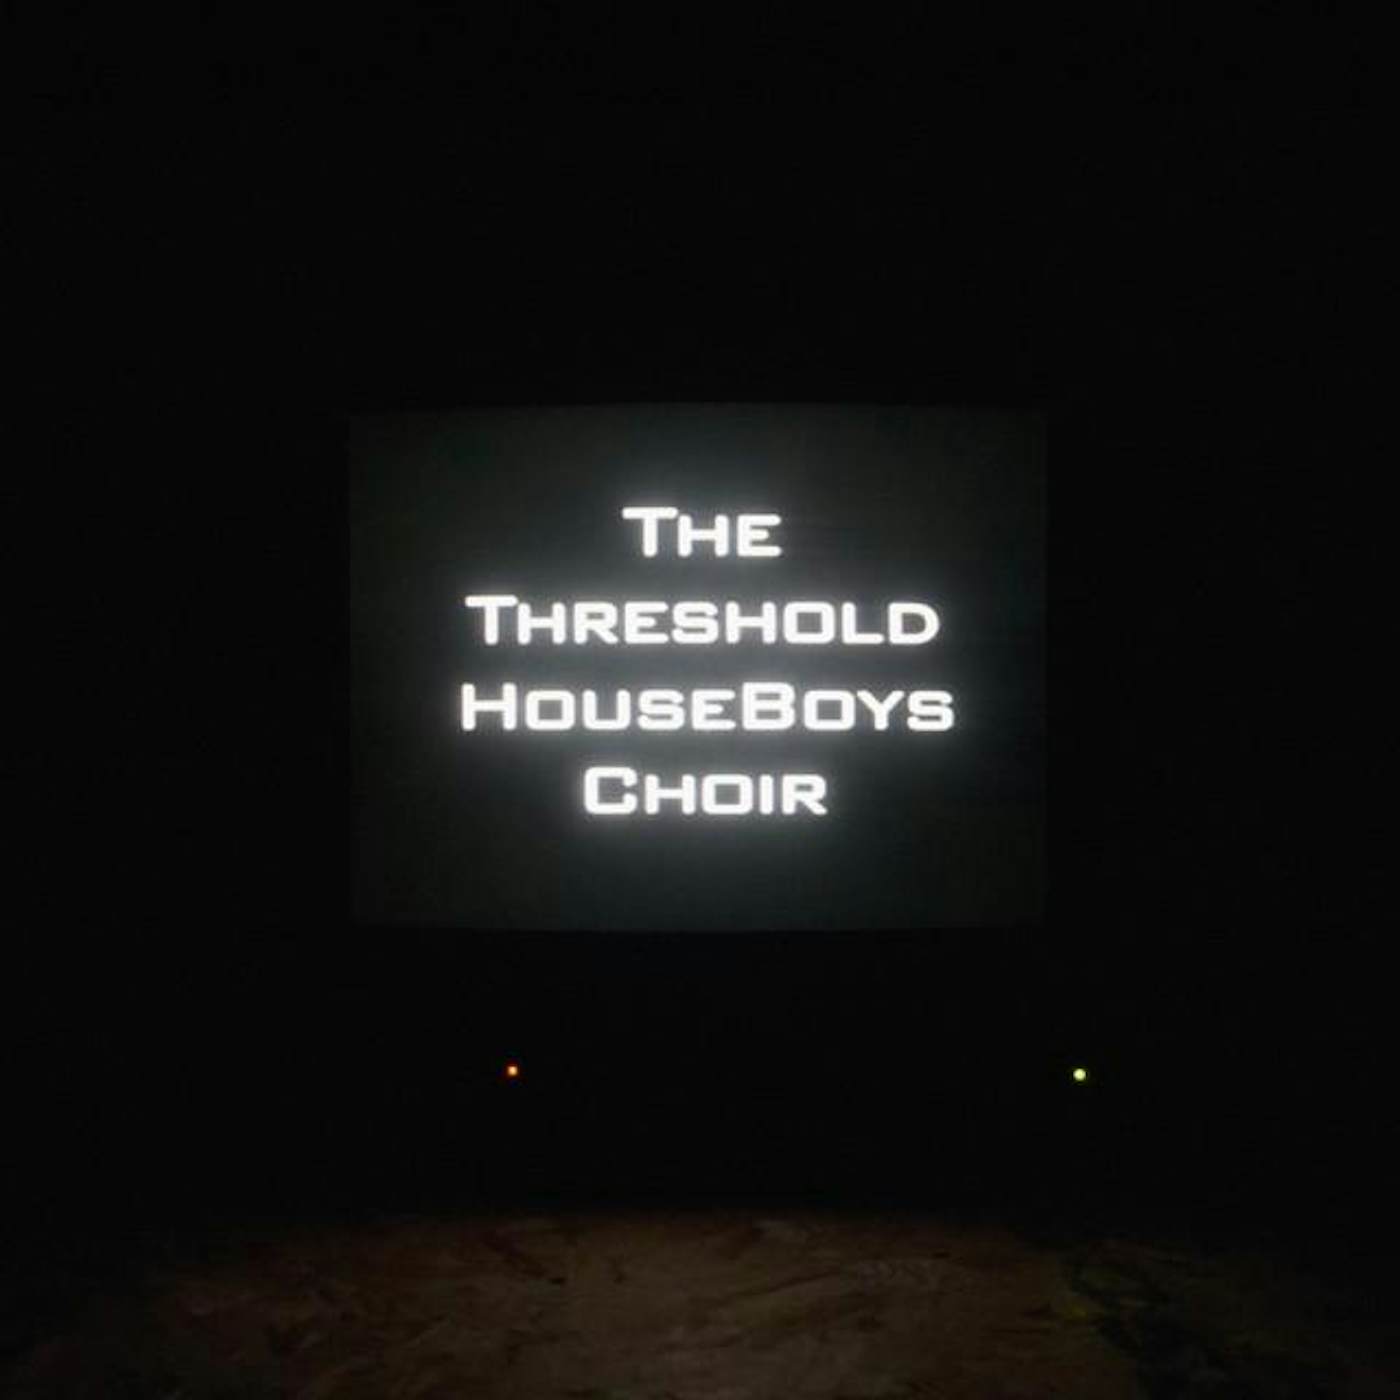 The Threshold HouseBoys Choir